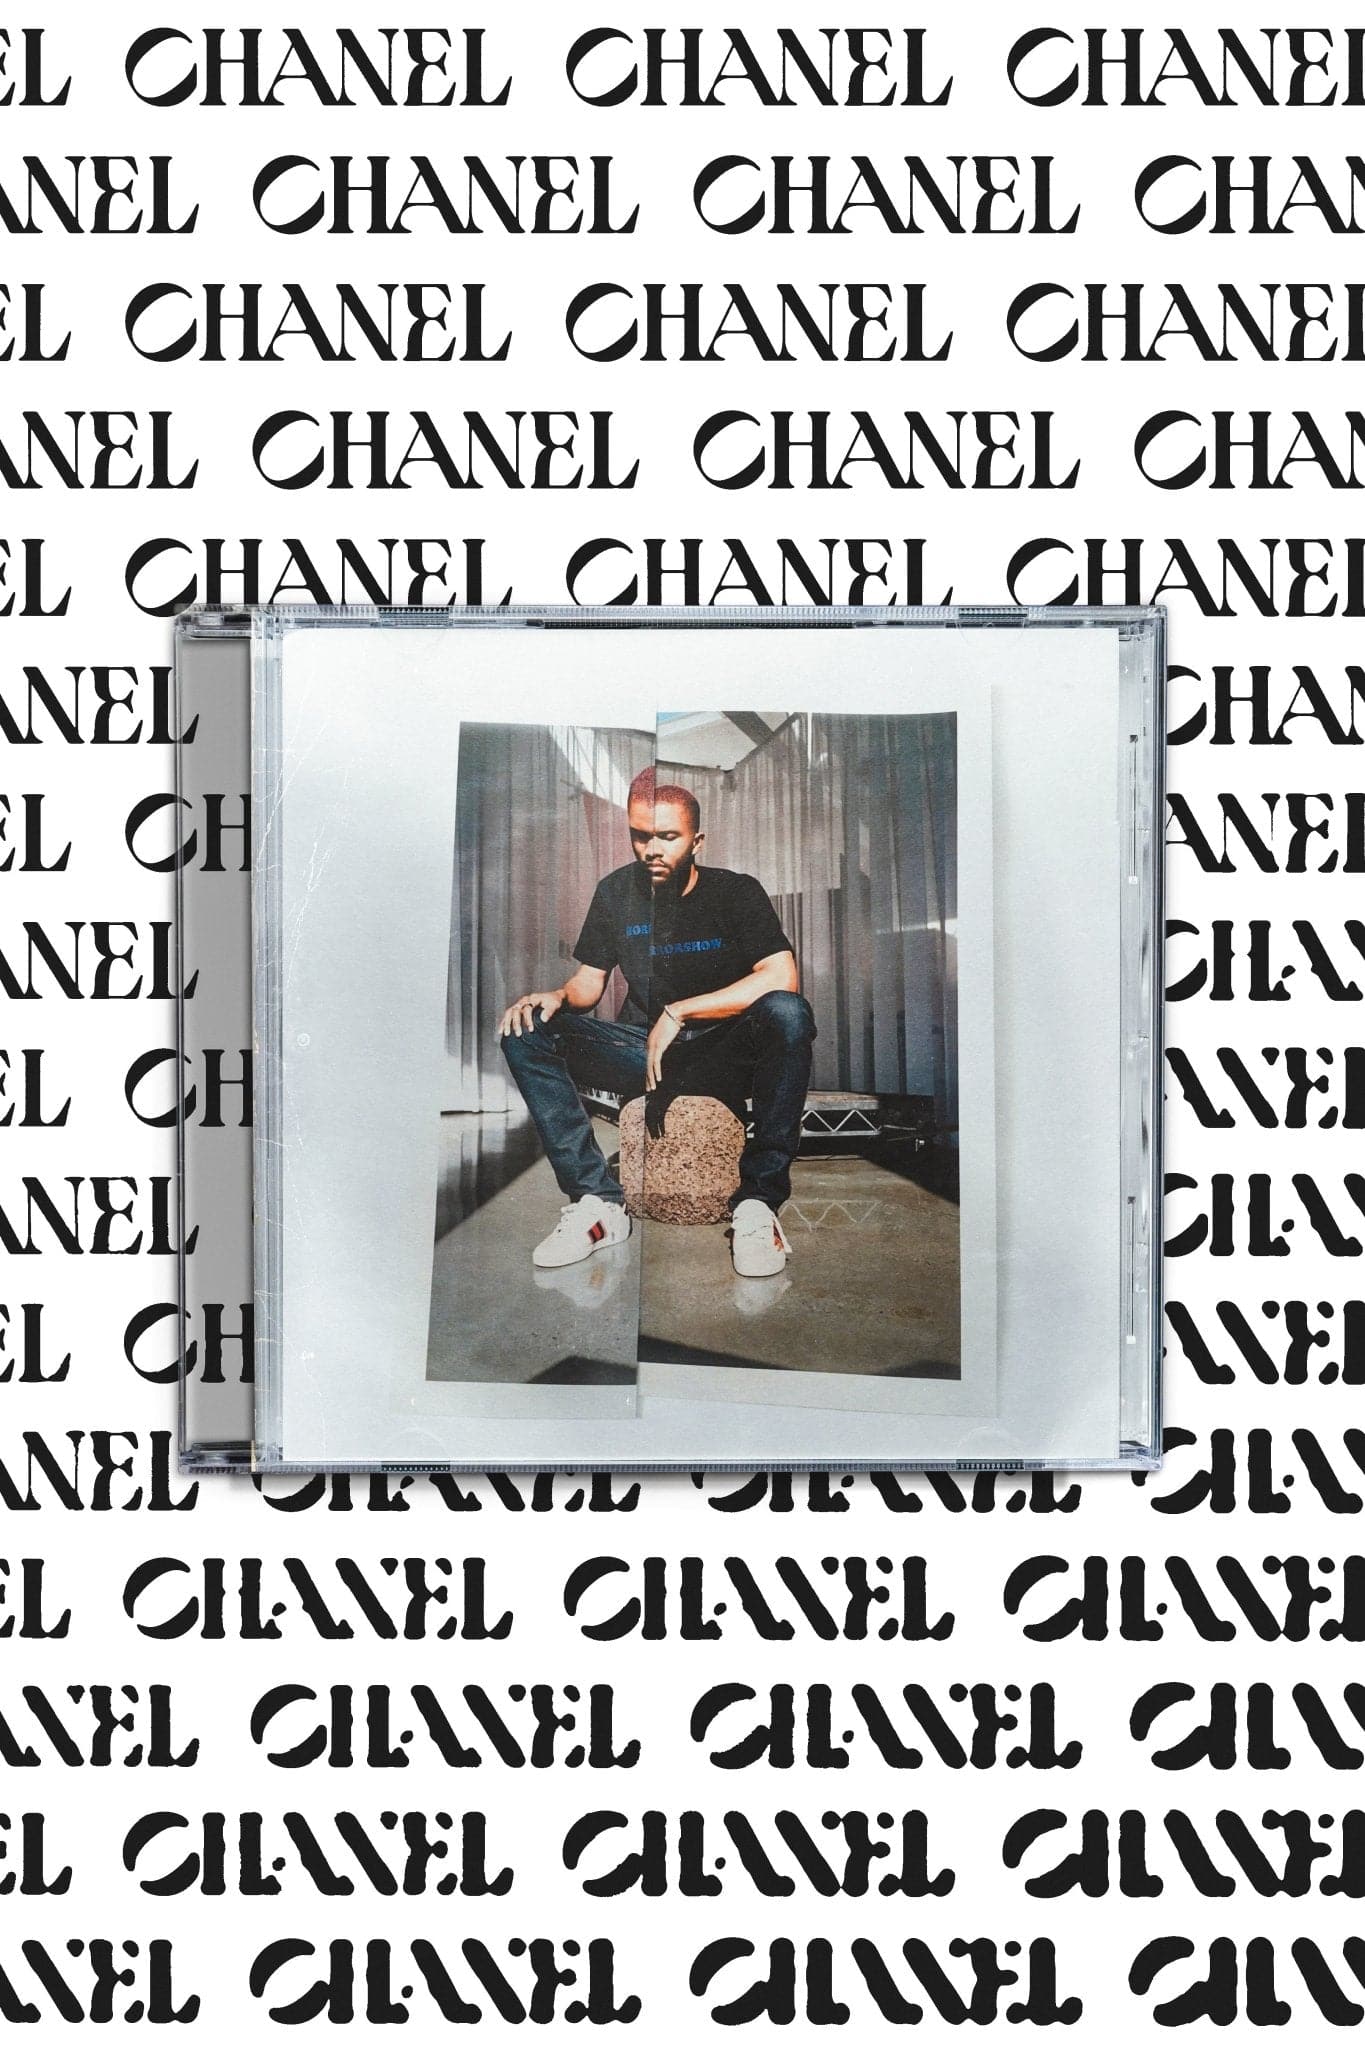 Frank Ocean 'Chanel' Poster